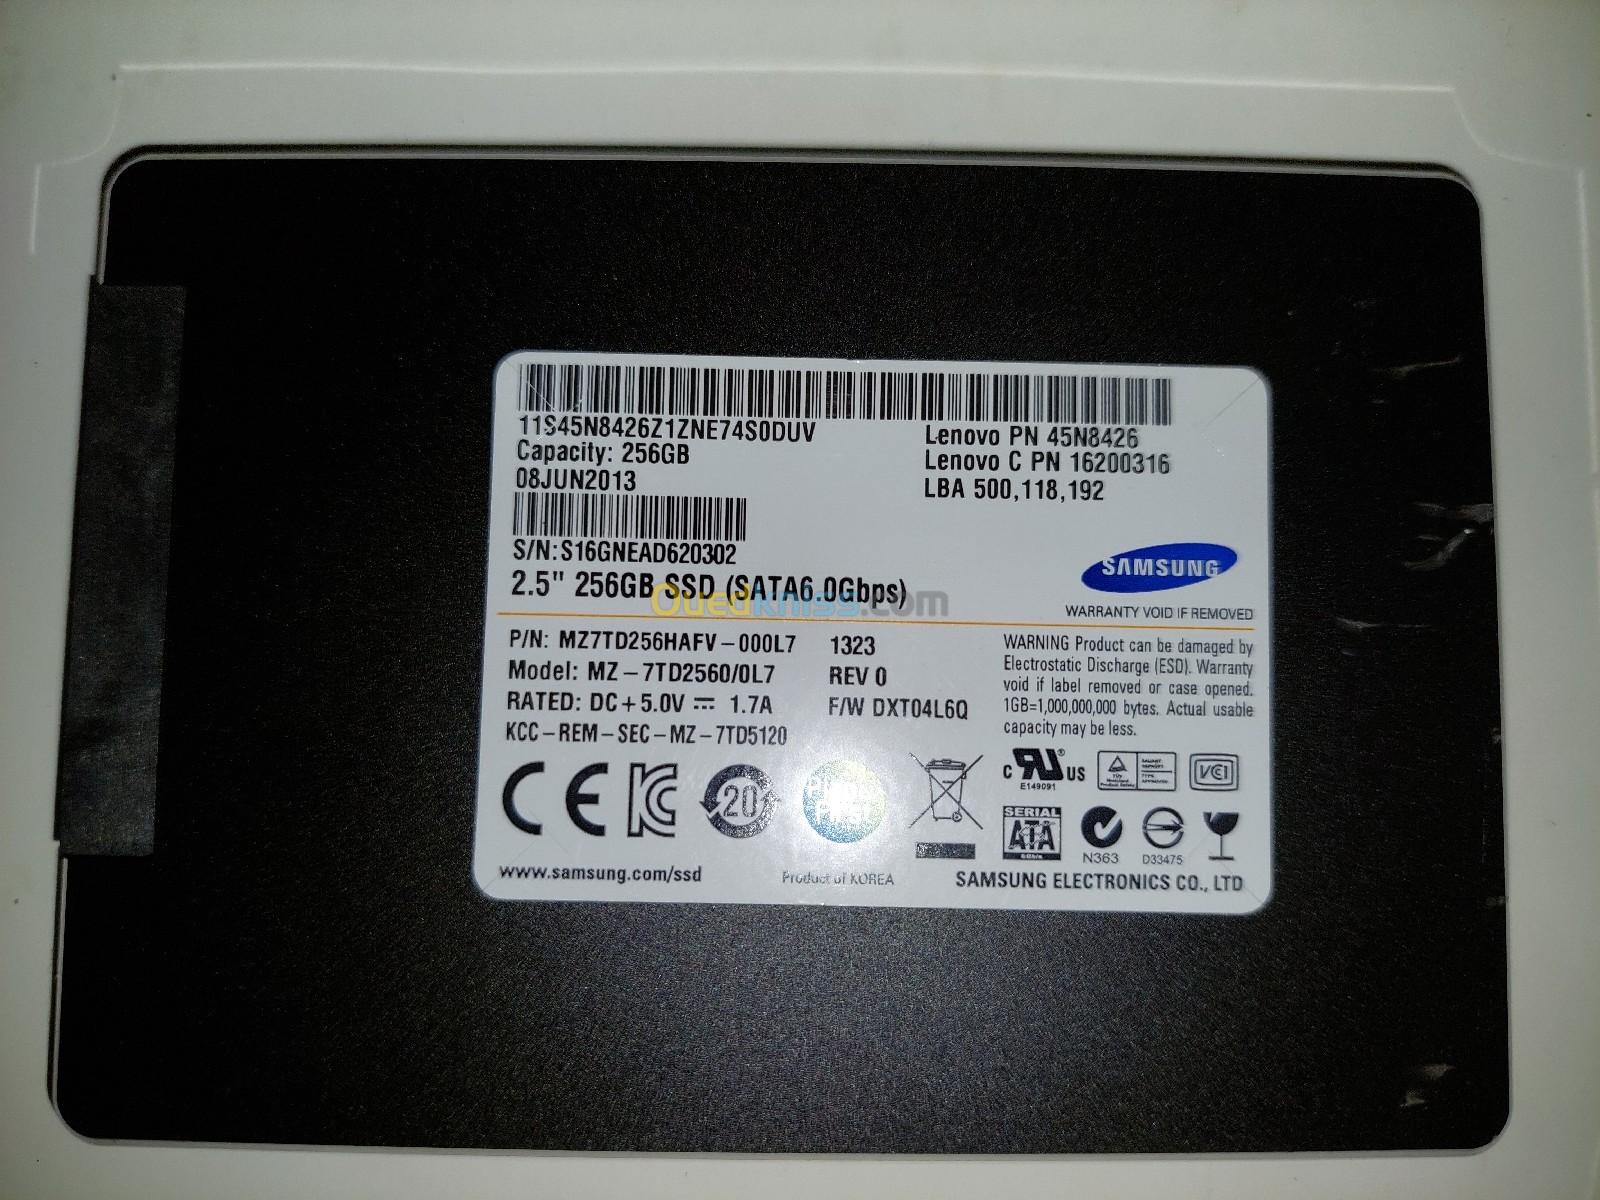 SAMSUNG SSD 850 EVO 250GB